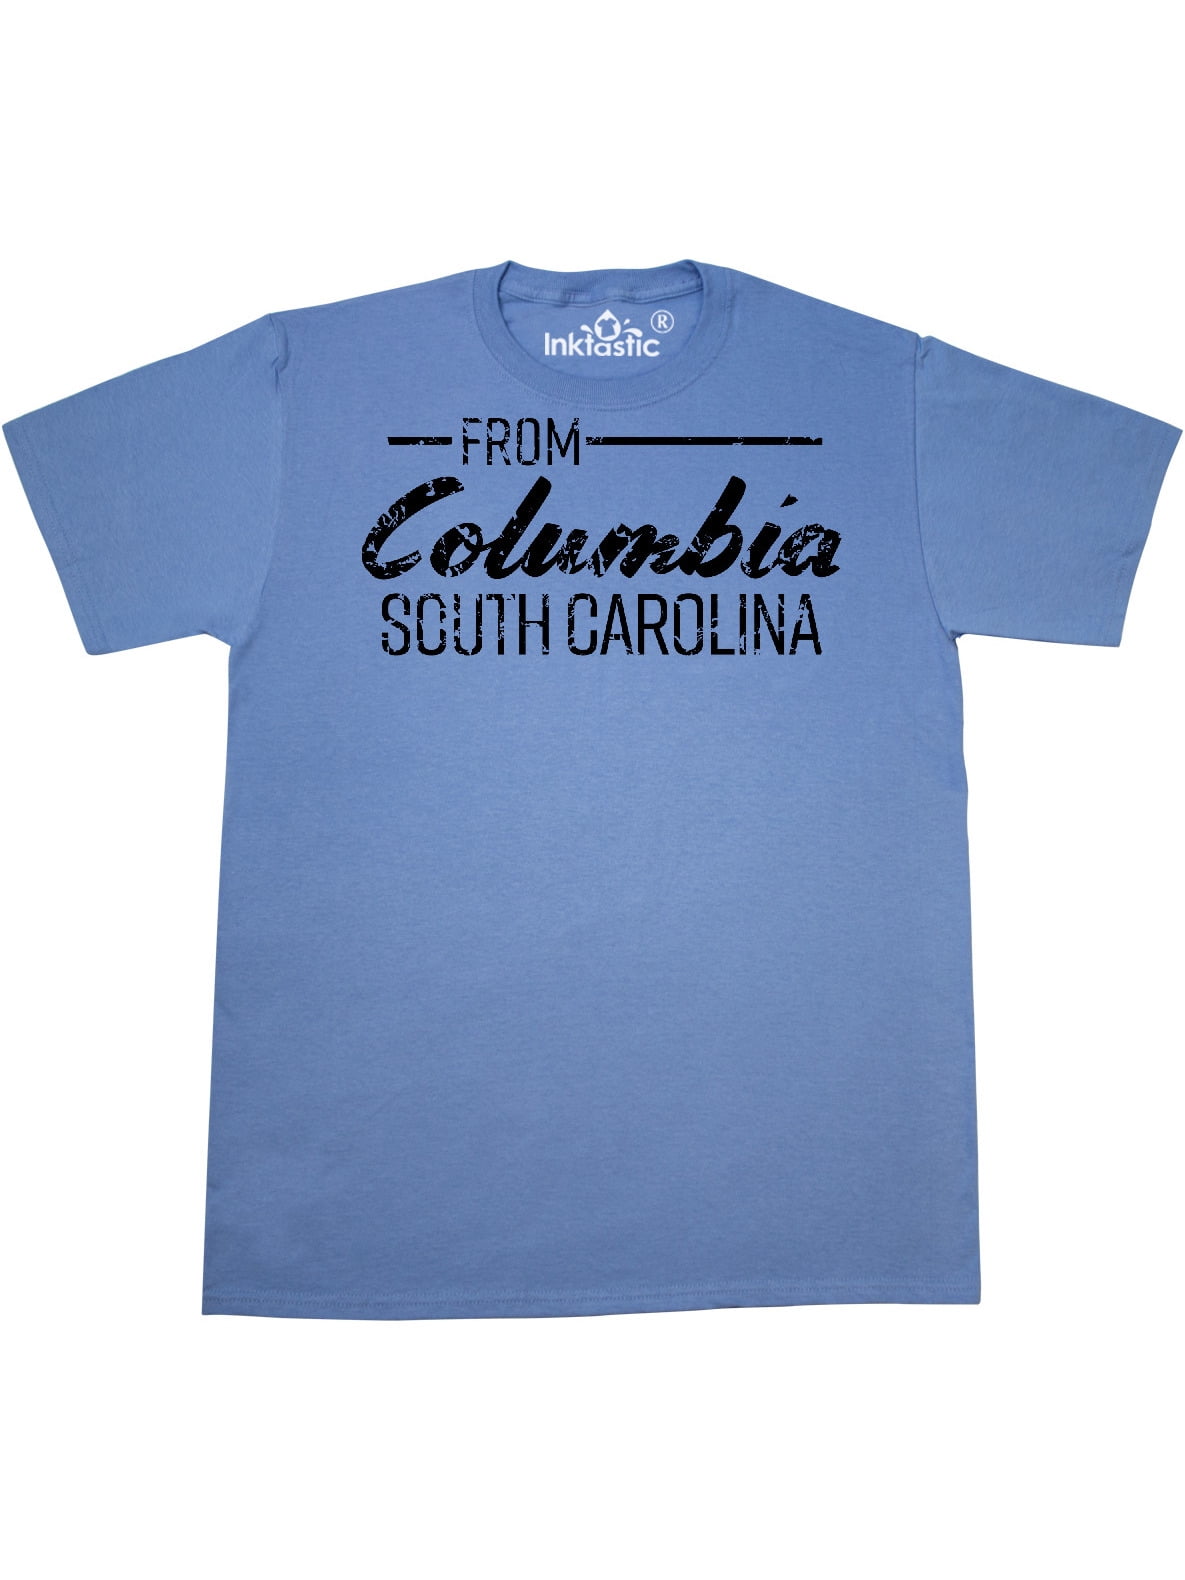 tee shirt printing columbia sc